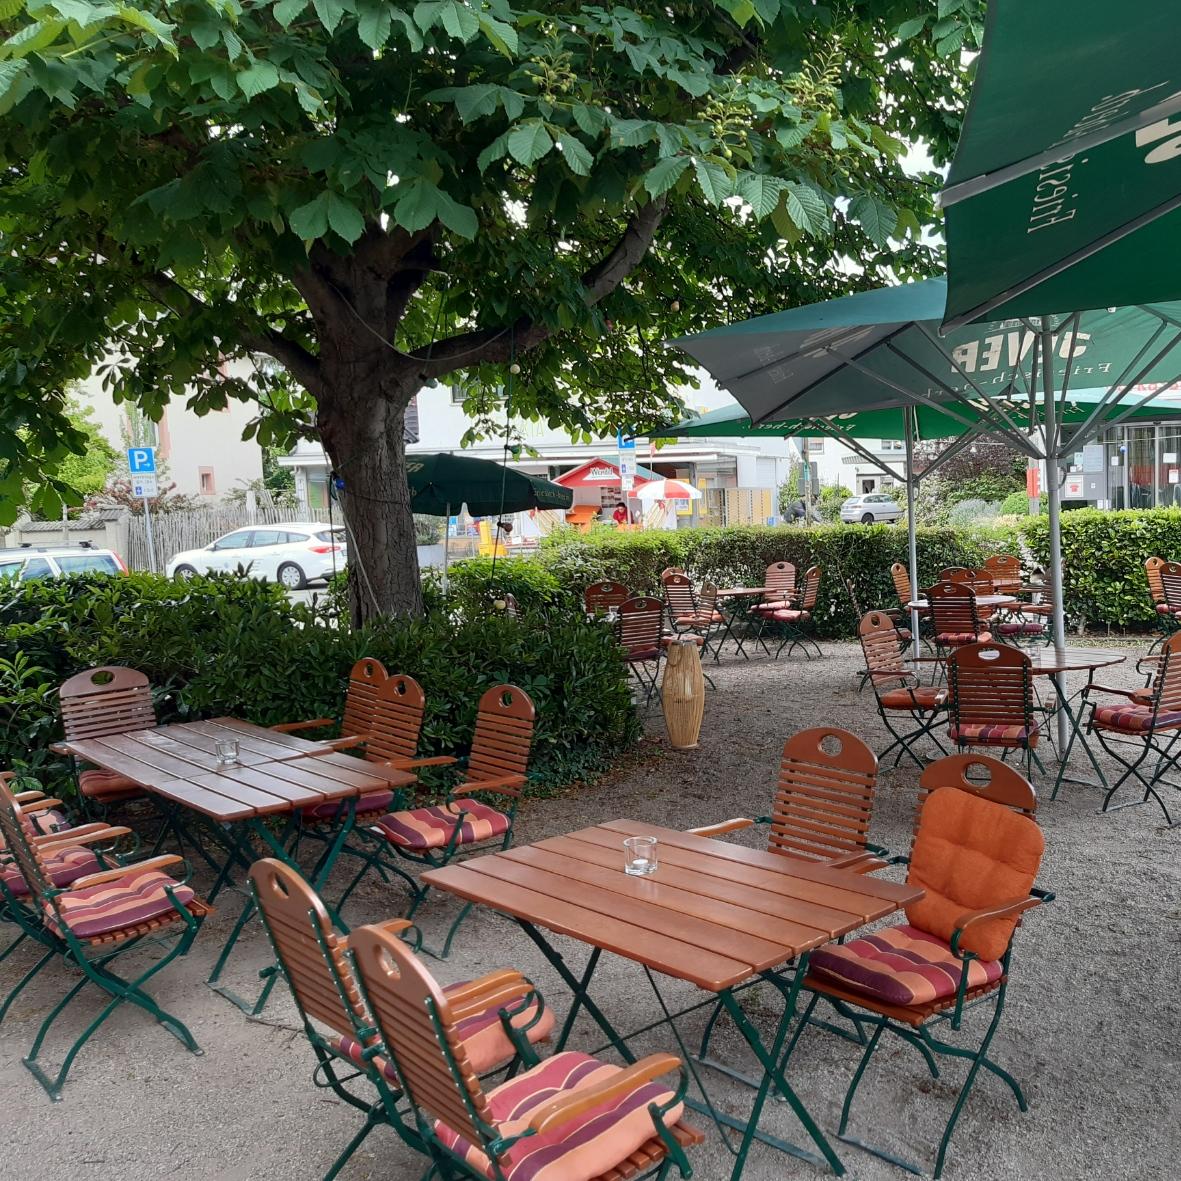 Restaurant "Bar-Restaurant Friedrich 7" in  Seeheim-Jugenheim